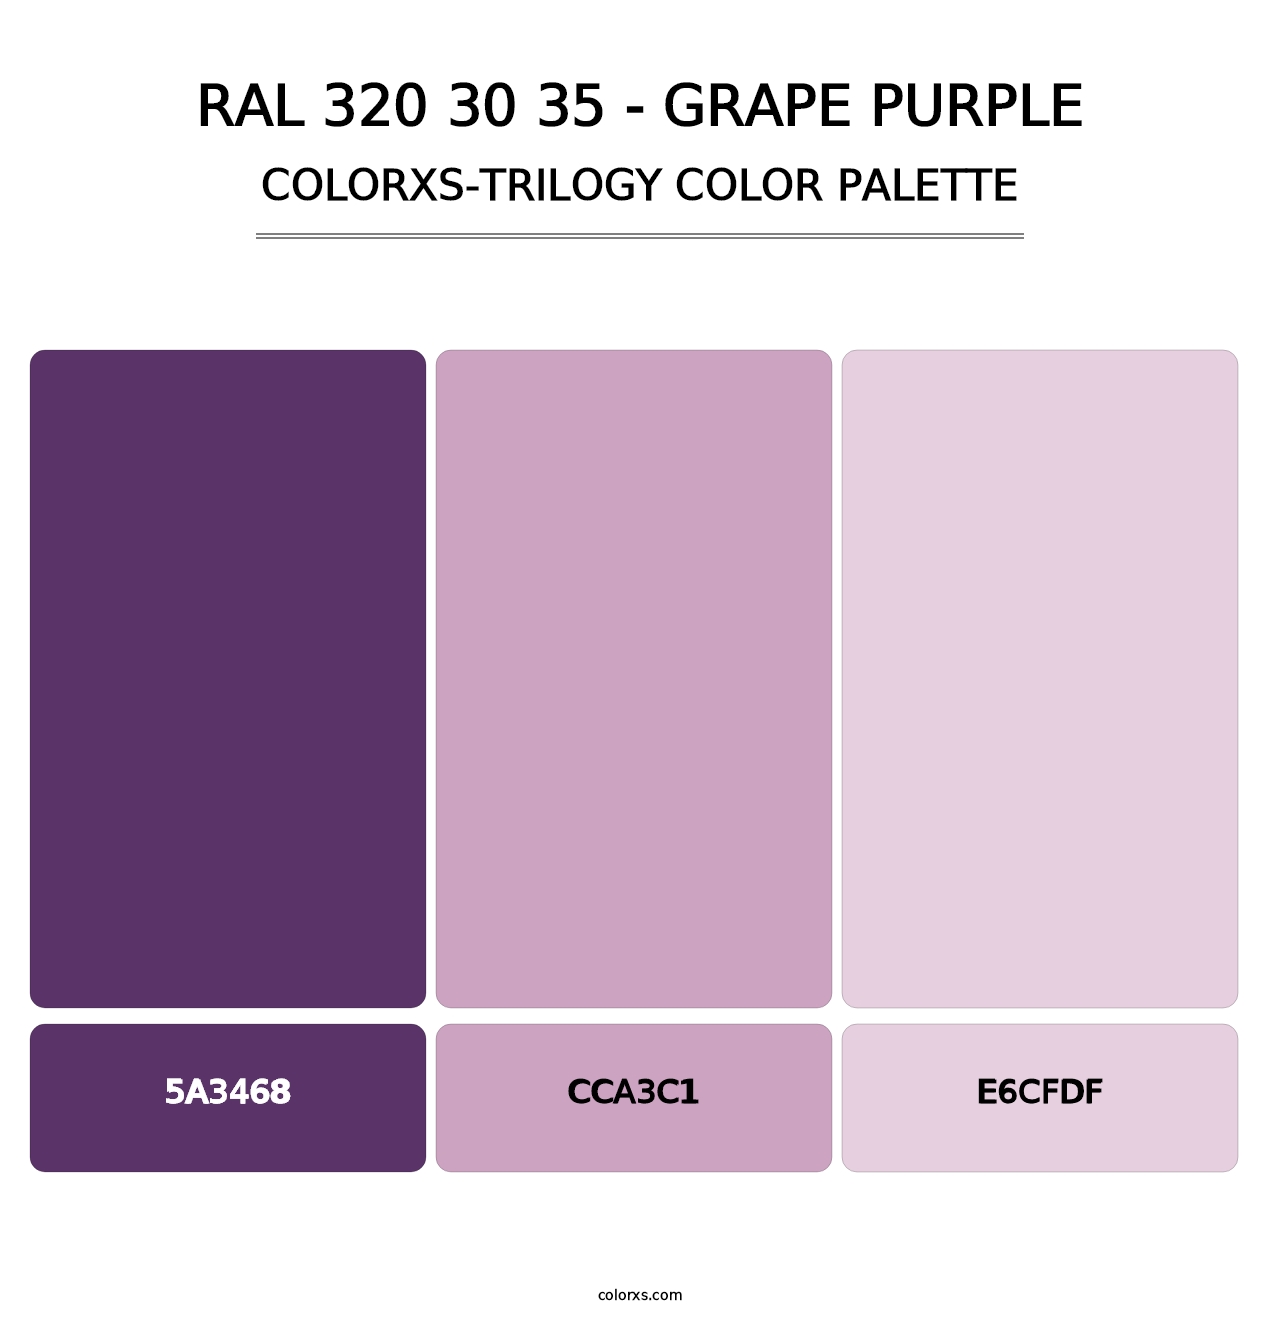 RAL 320 30 35 - Grape Purple - Colorxs Trilogy Palette